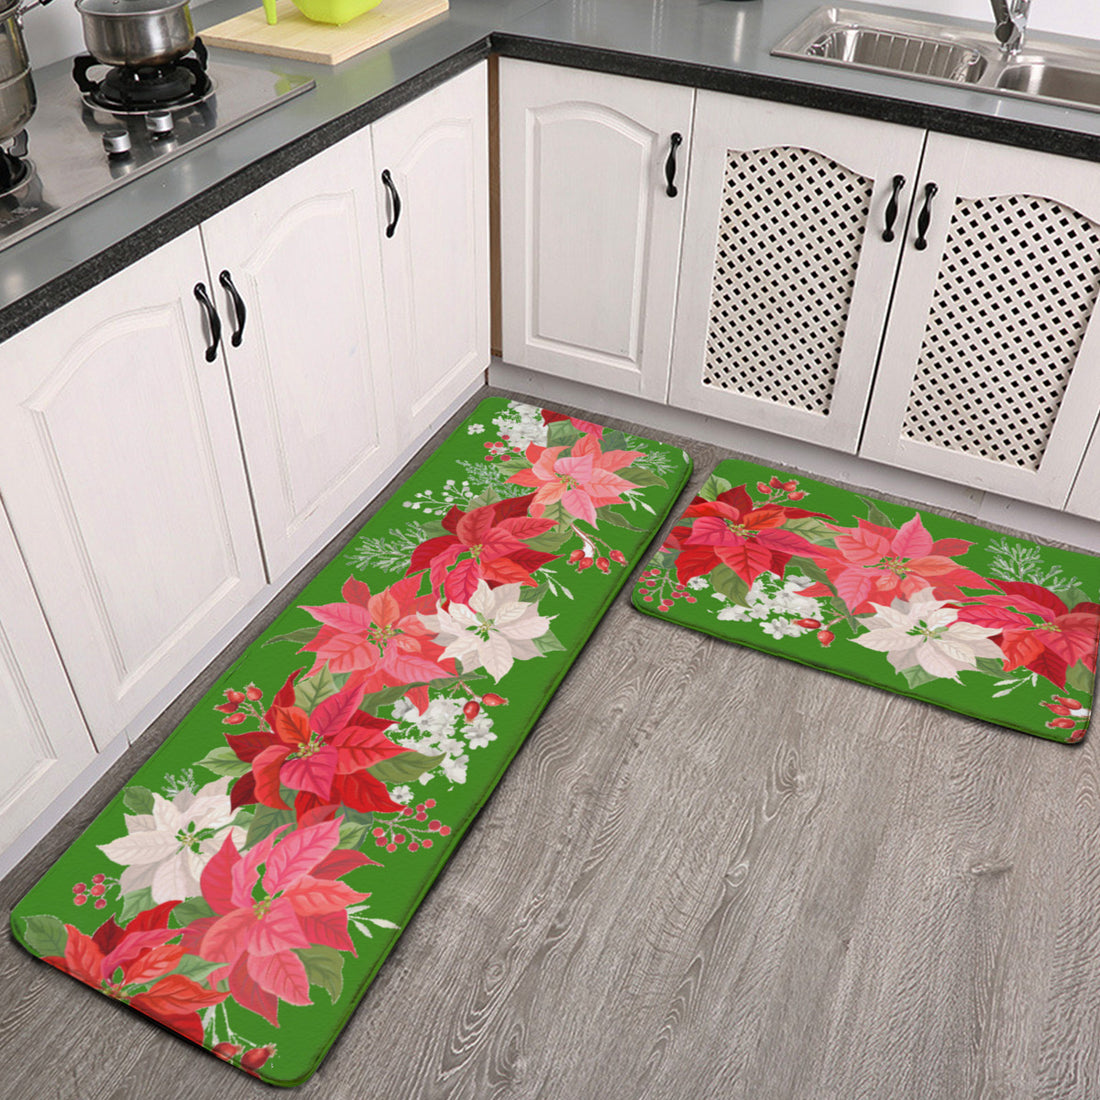 Non-slip two-piece M kitchen mat Flannel poinsettia Home-clothes-jewelry